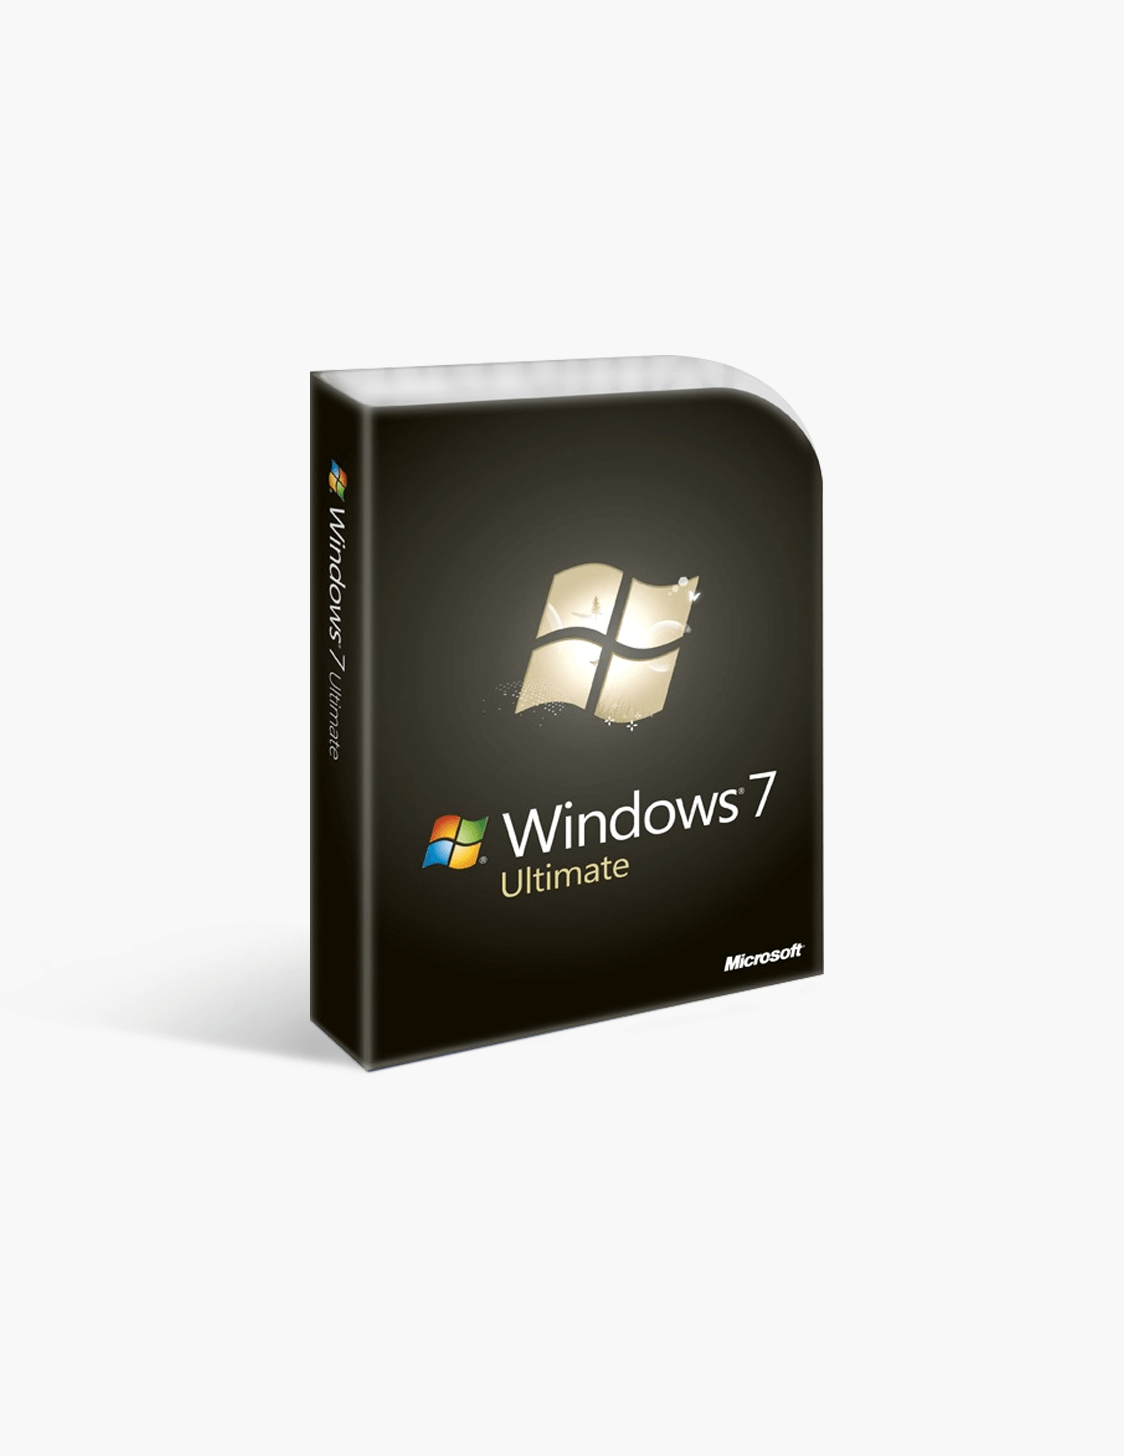 windows 7 ultimate 32bit download